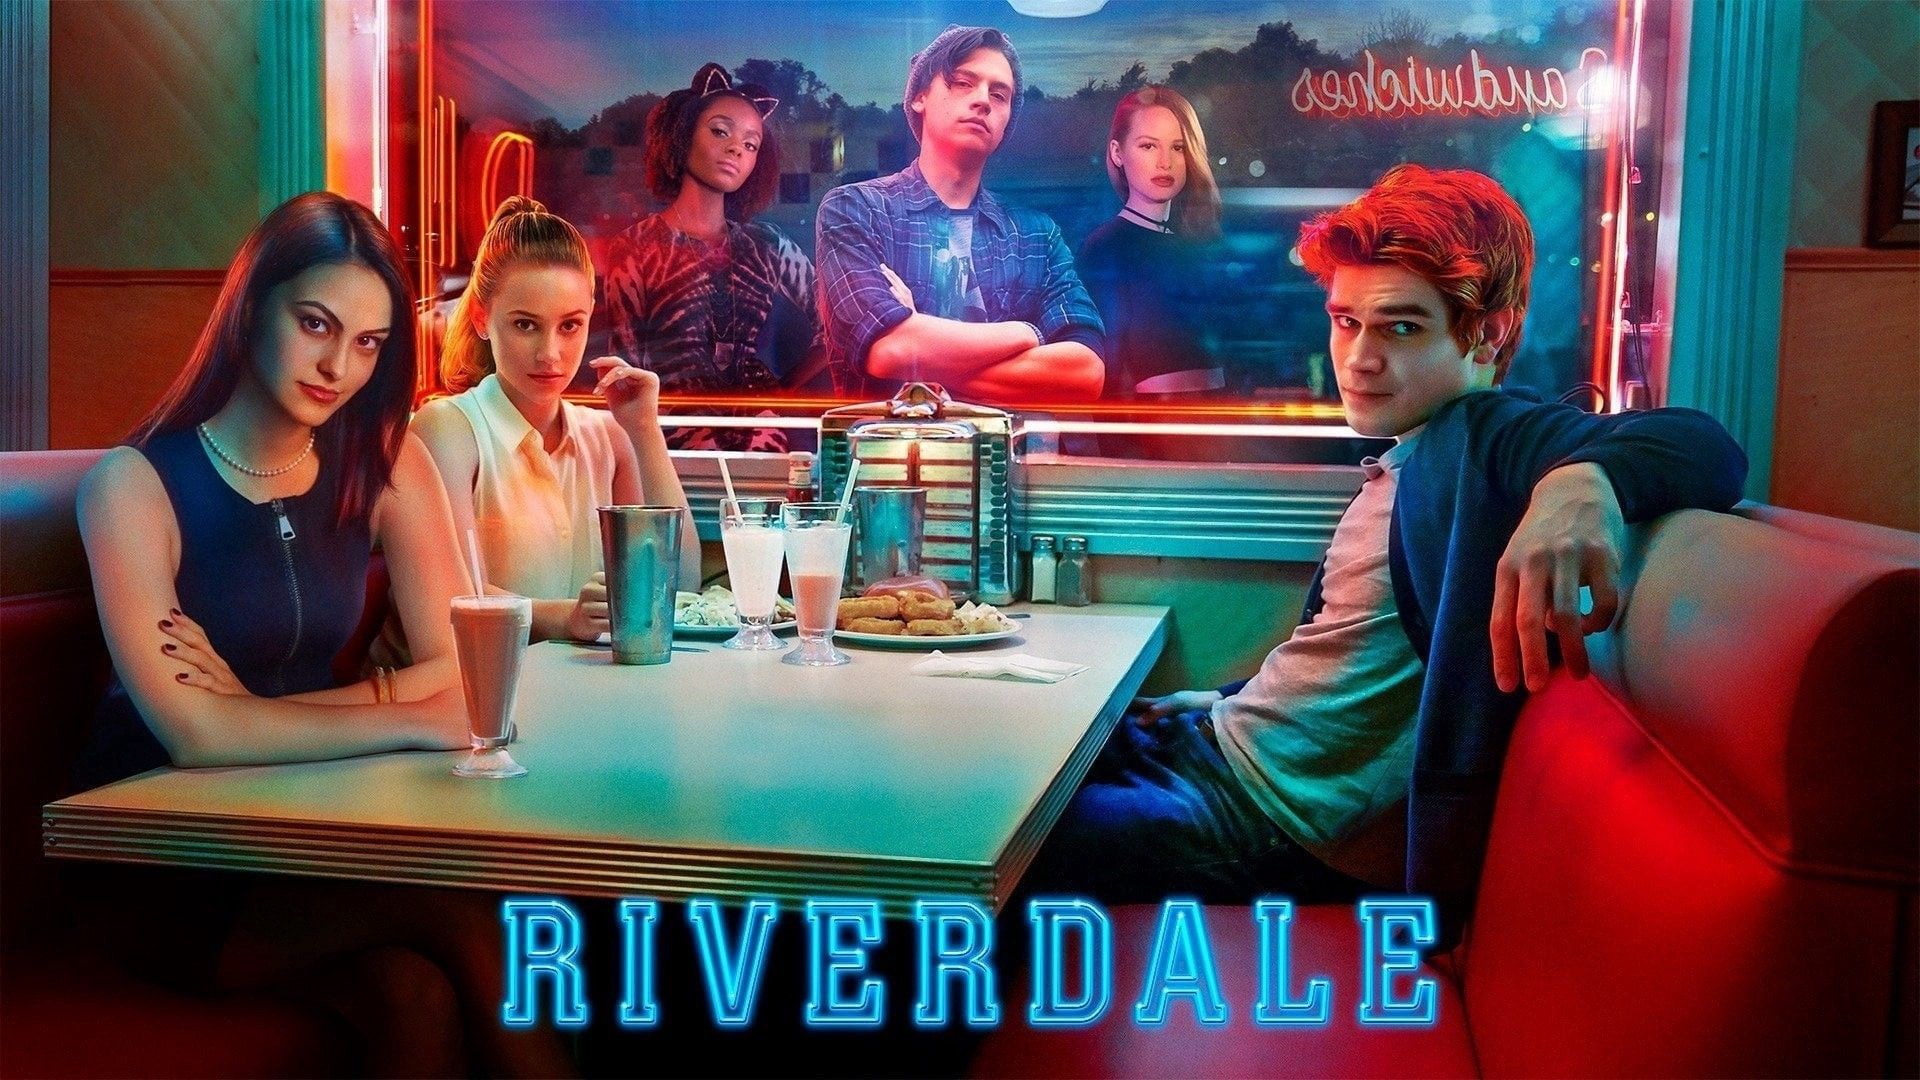 S5.Ep2) Riverdale / Season 5 ; Episode 2 > Full Show The CW '2021'. by Tesila W Hawkins. Riverdale S5xE2 STREAM. TV The CW'S. Jan, 2021